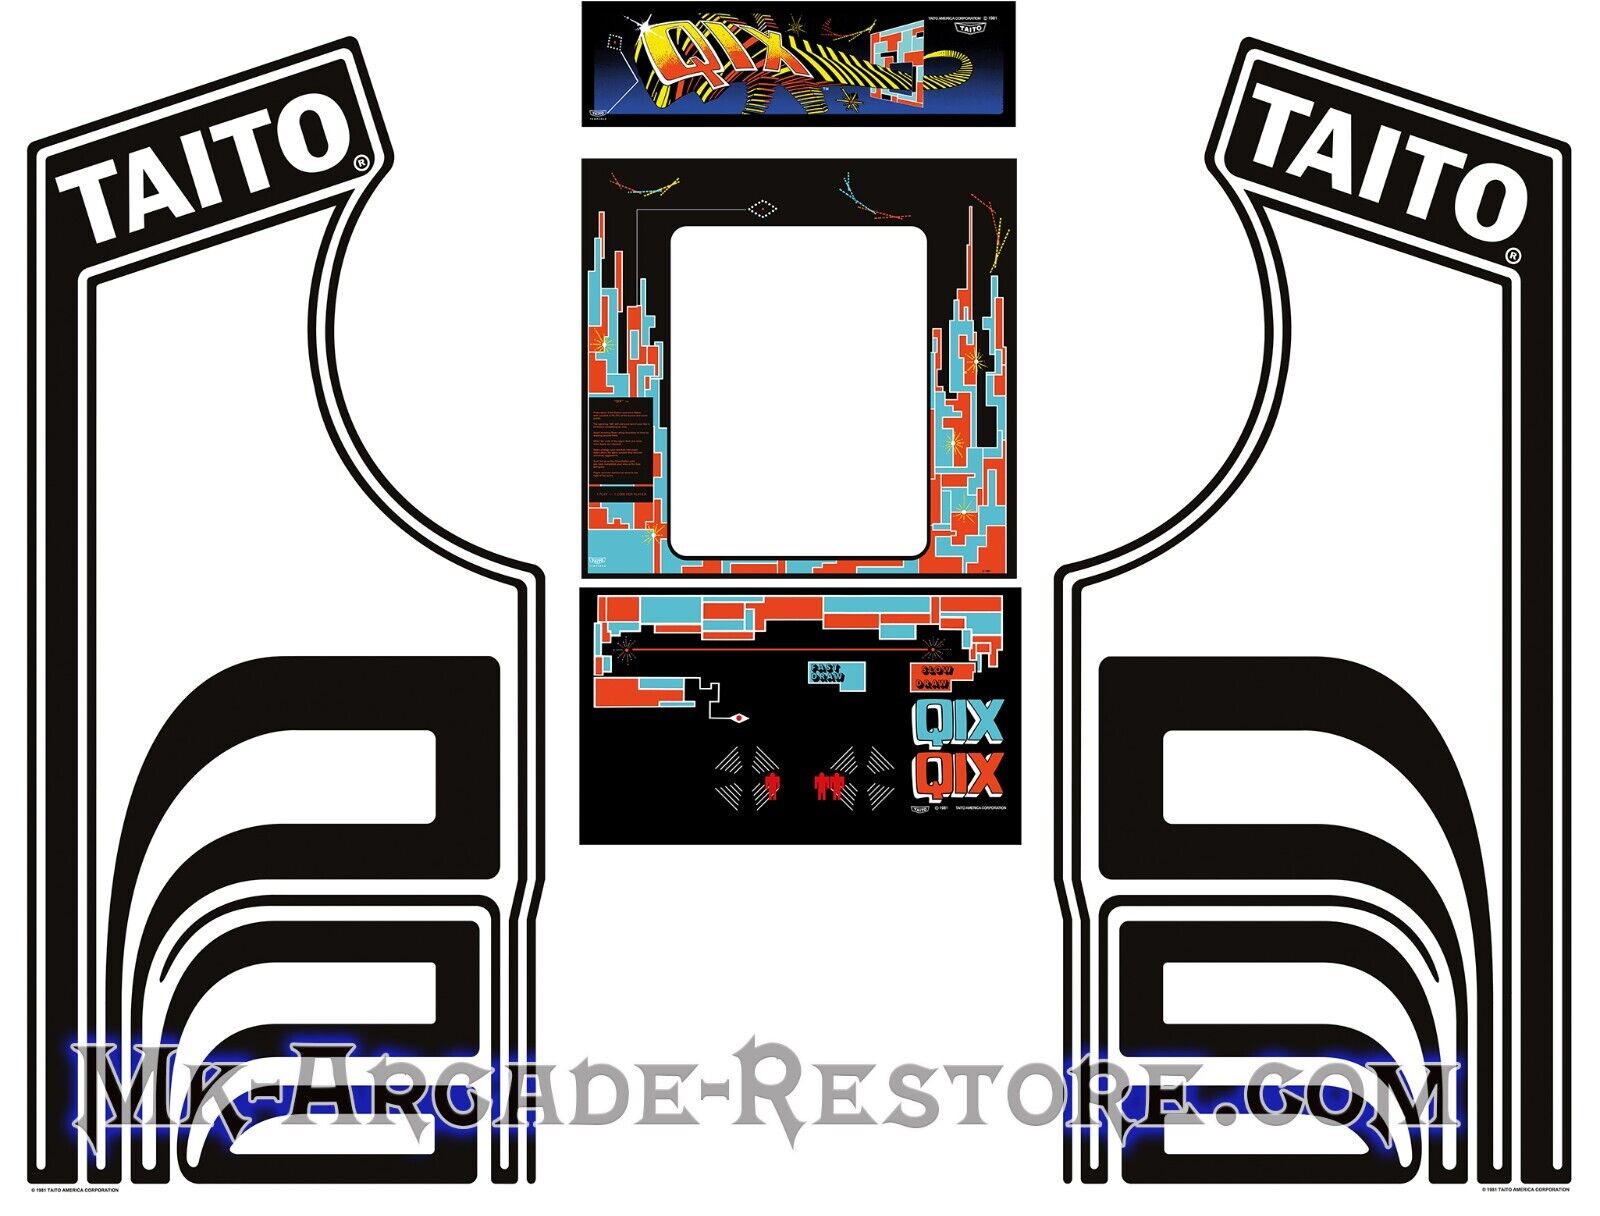 Qix Taito Side Art Arcade Cabinet Artwork Kit Graphics Decals Print